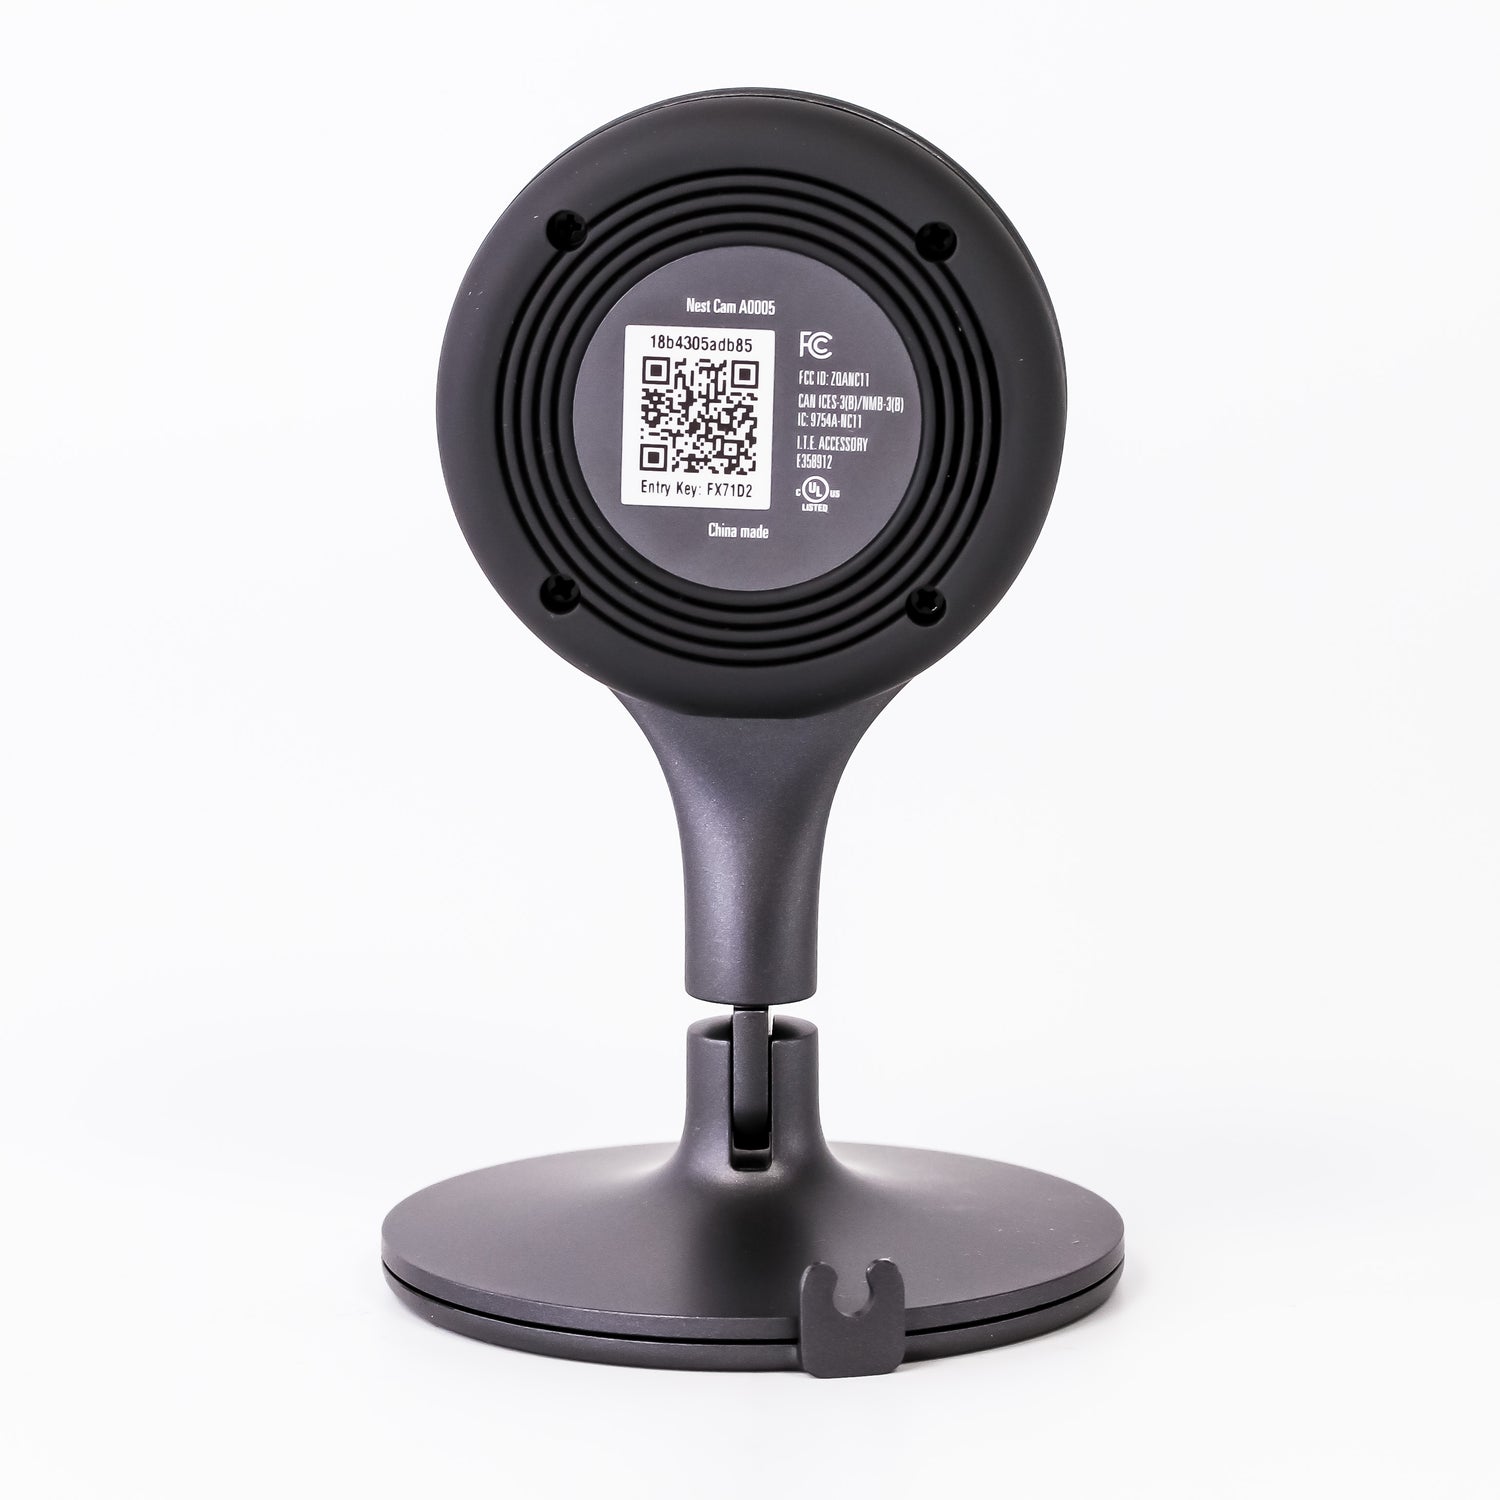 Google Nest Cam Indoor Security Camera w/ Amazon Alexa - Black (Refurbished)